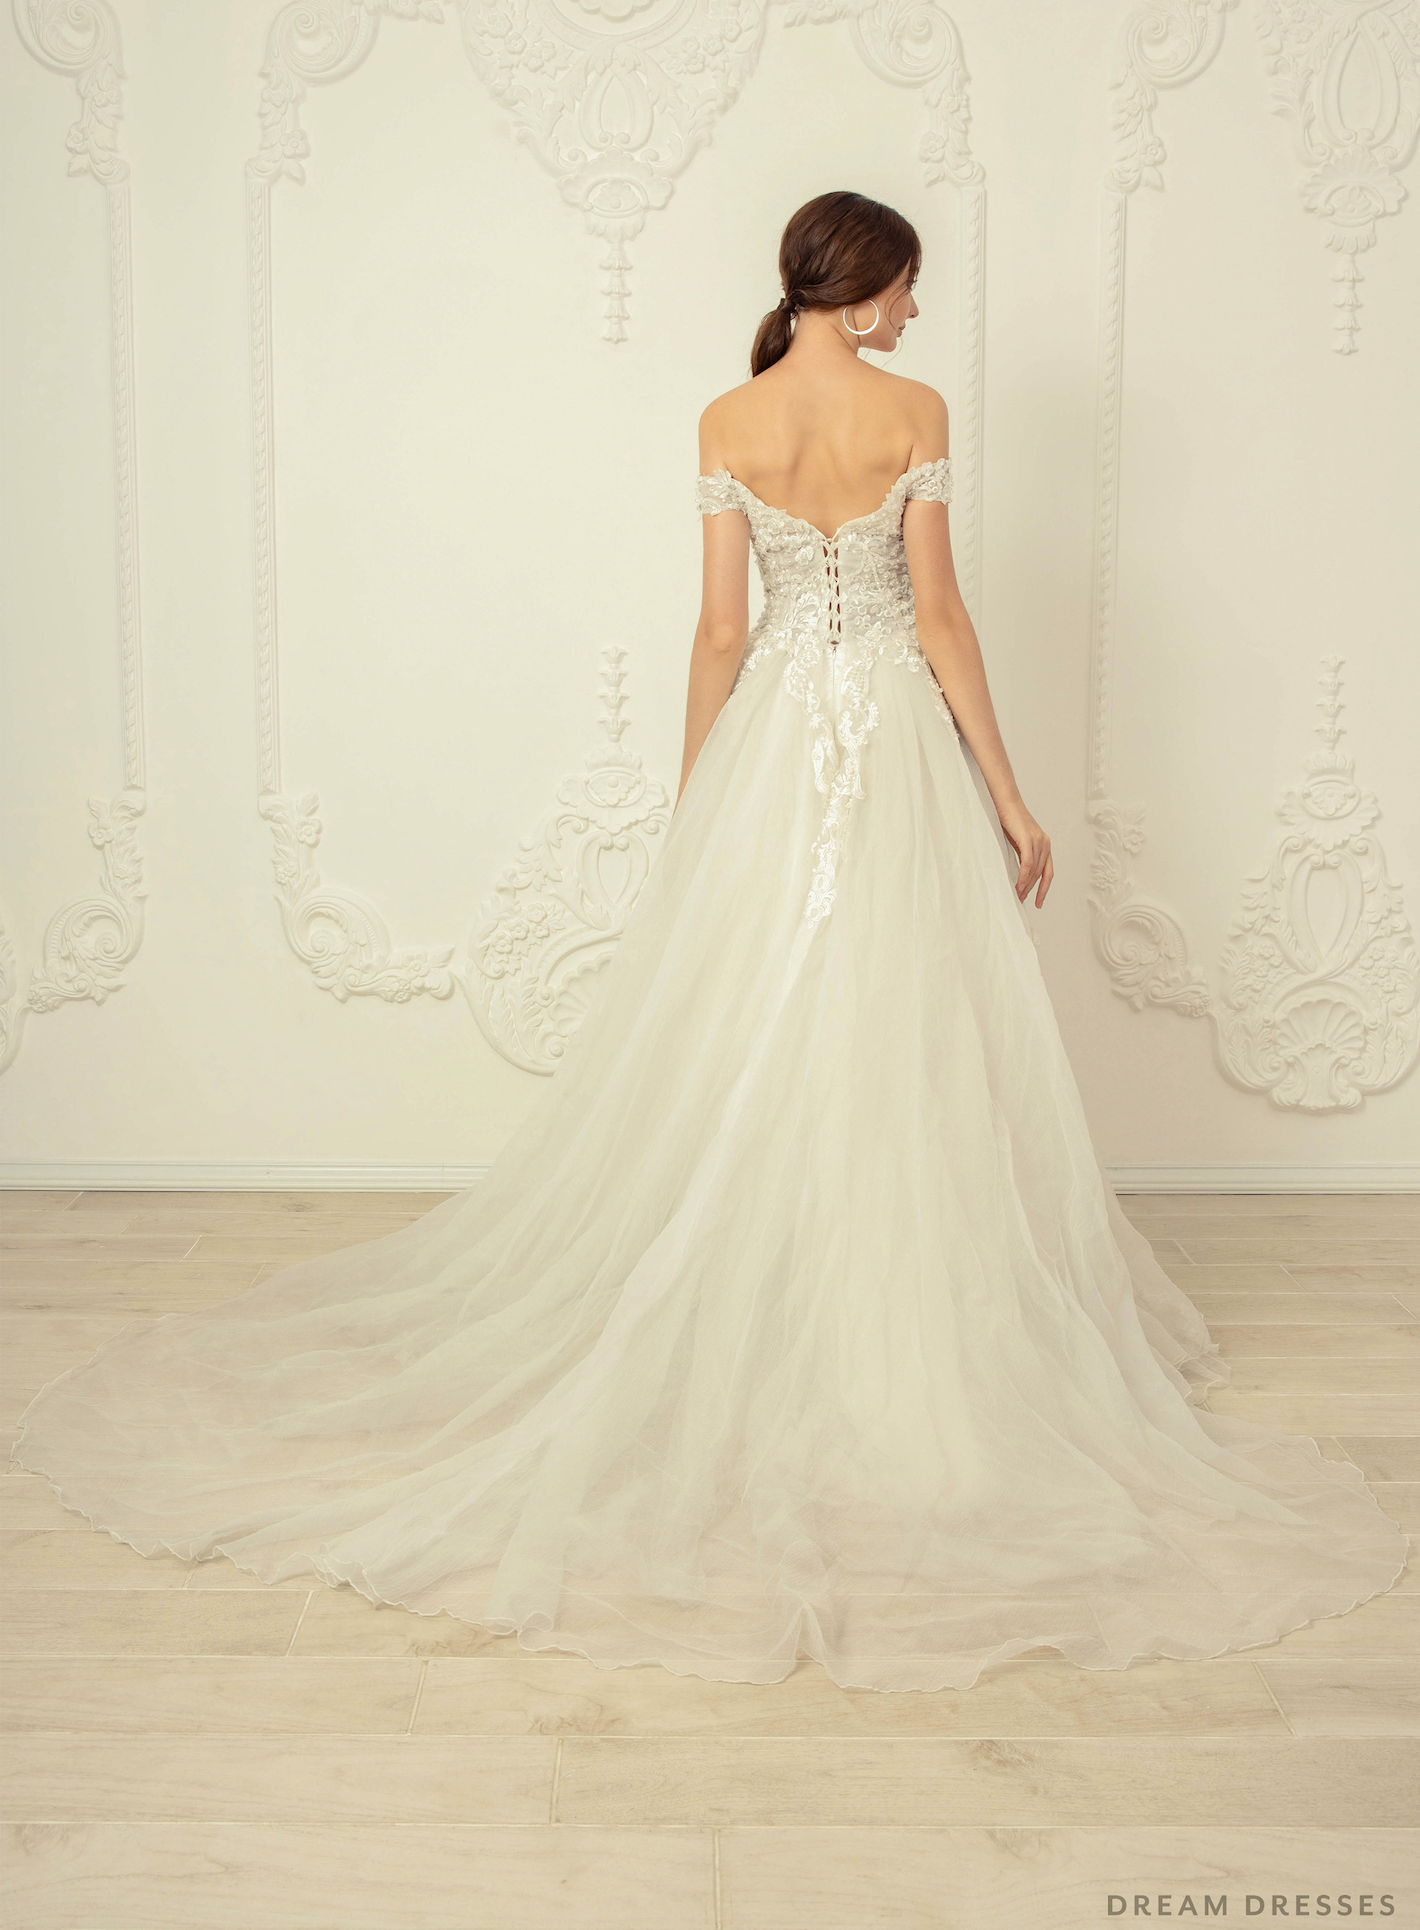 Off Shoulder A-line Wedding Dress (#Analia)